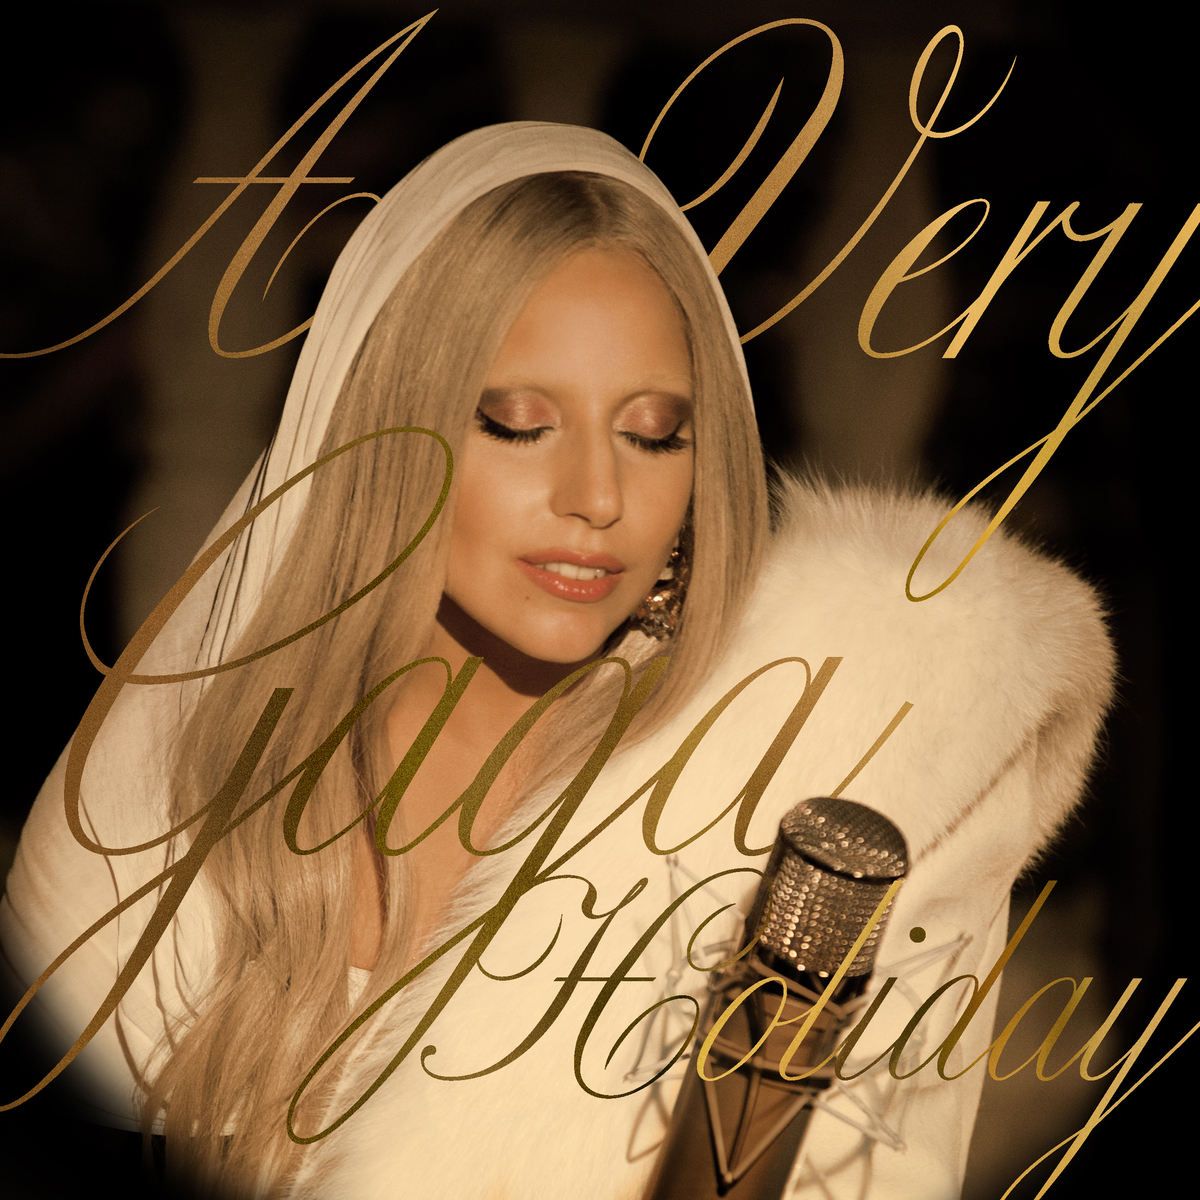 A Very Gaga Holiday [Album]